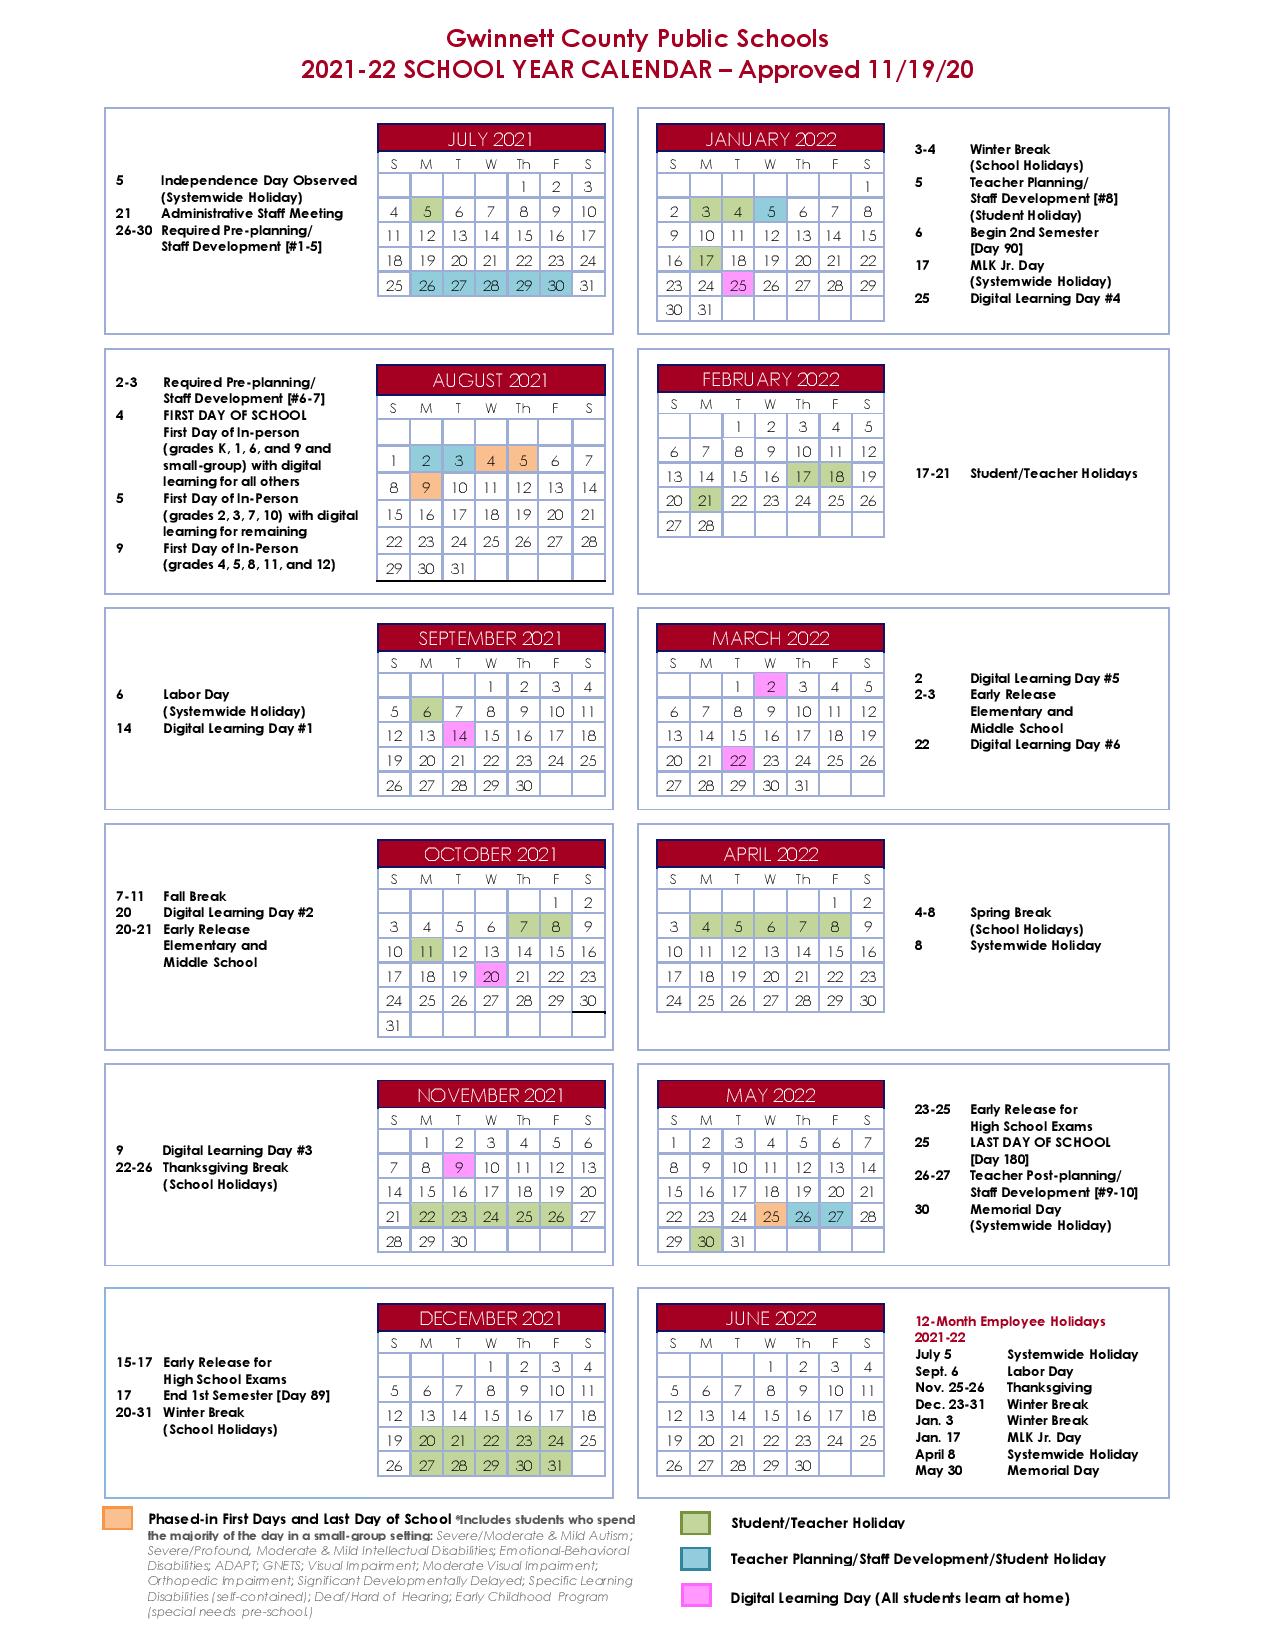 County Public Schools Calendar 20212022